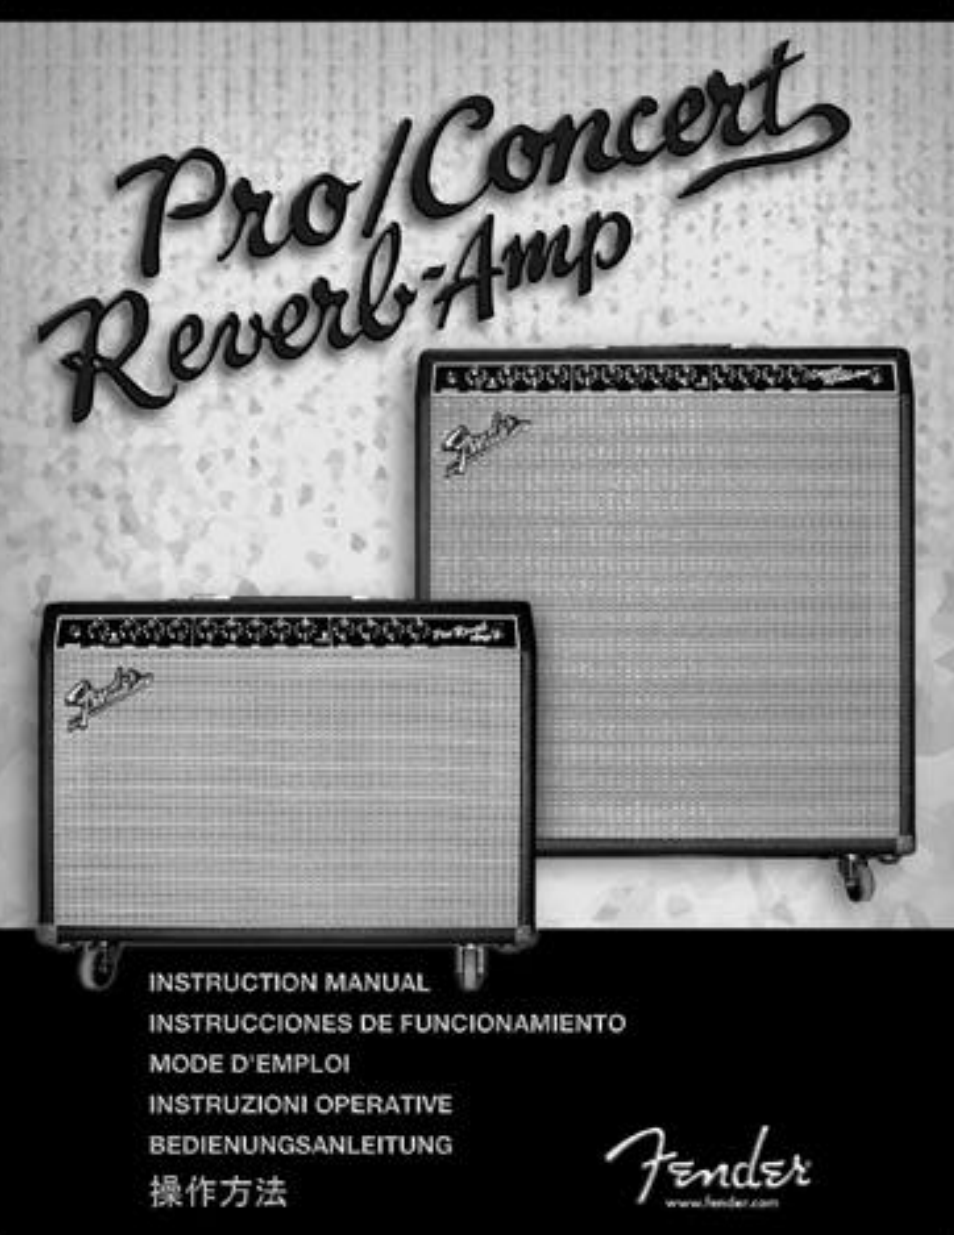 Concert Reverb Amp